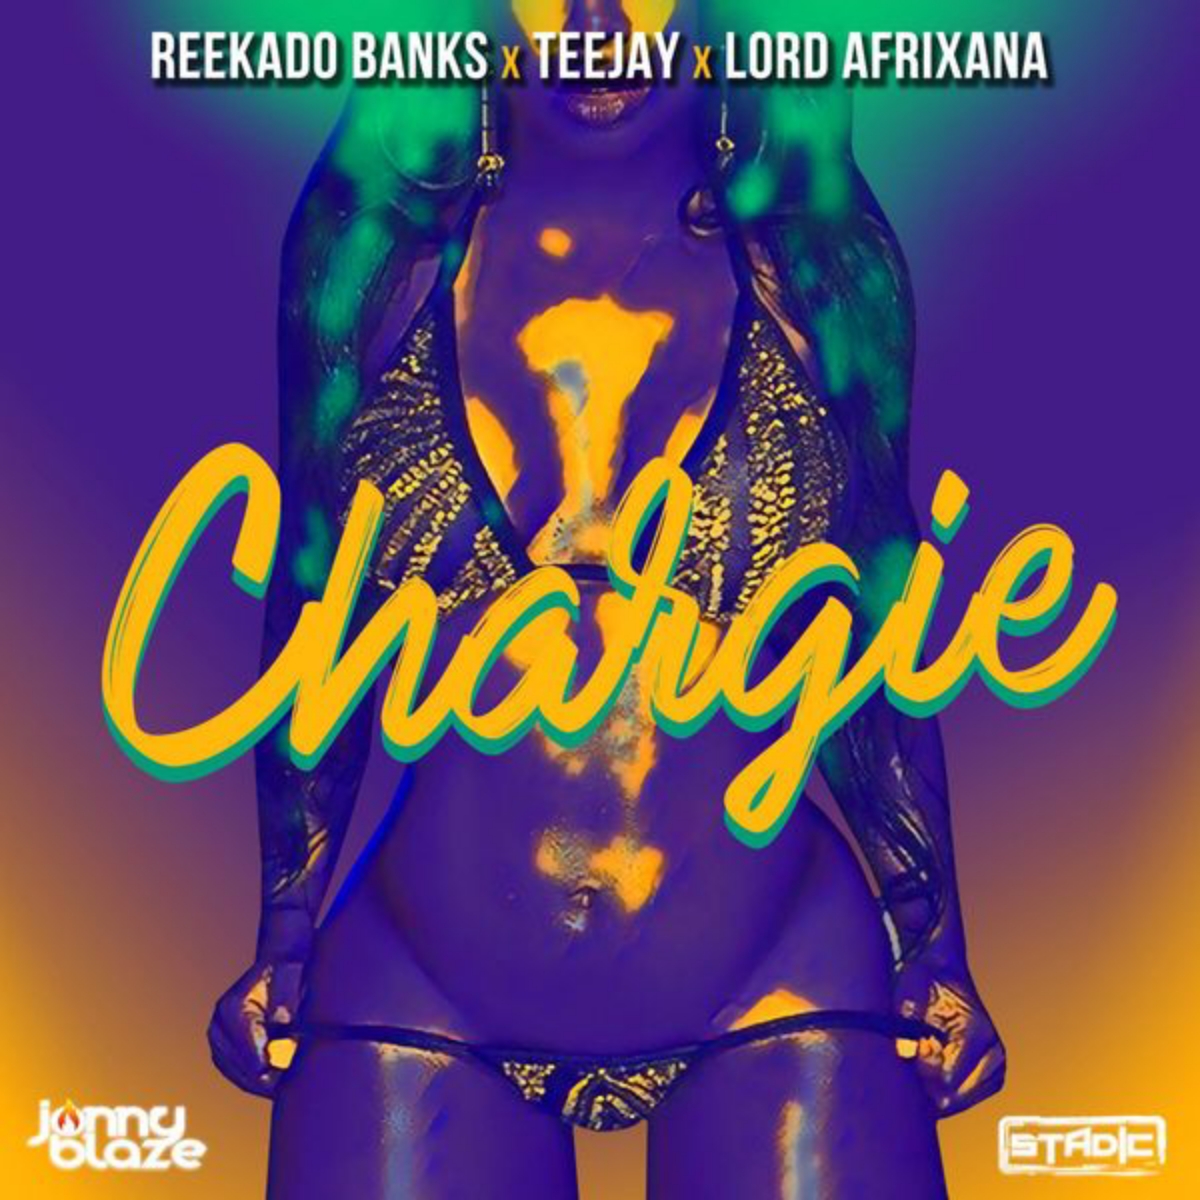 Reekado Banks - Chargie ft Teejay, Jonny Blaze & Stadic